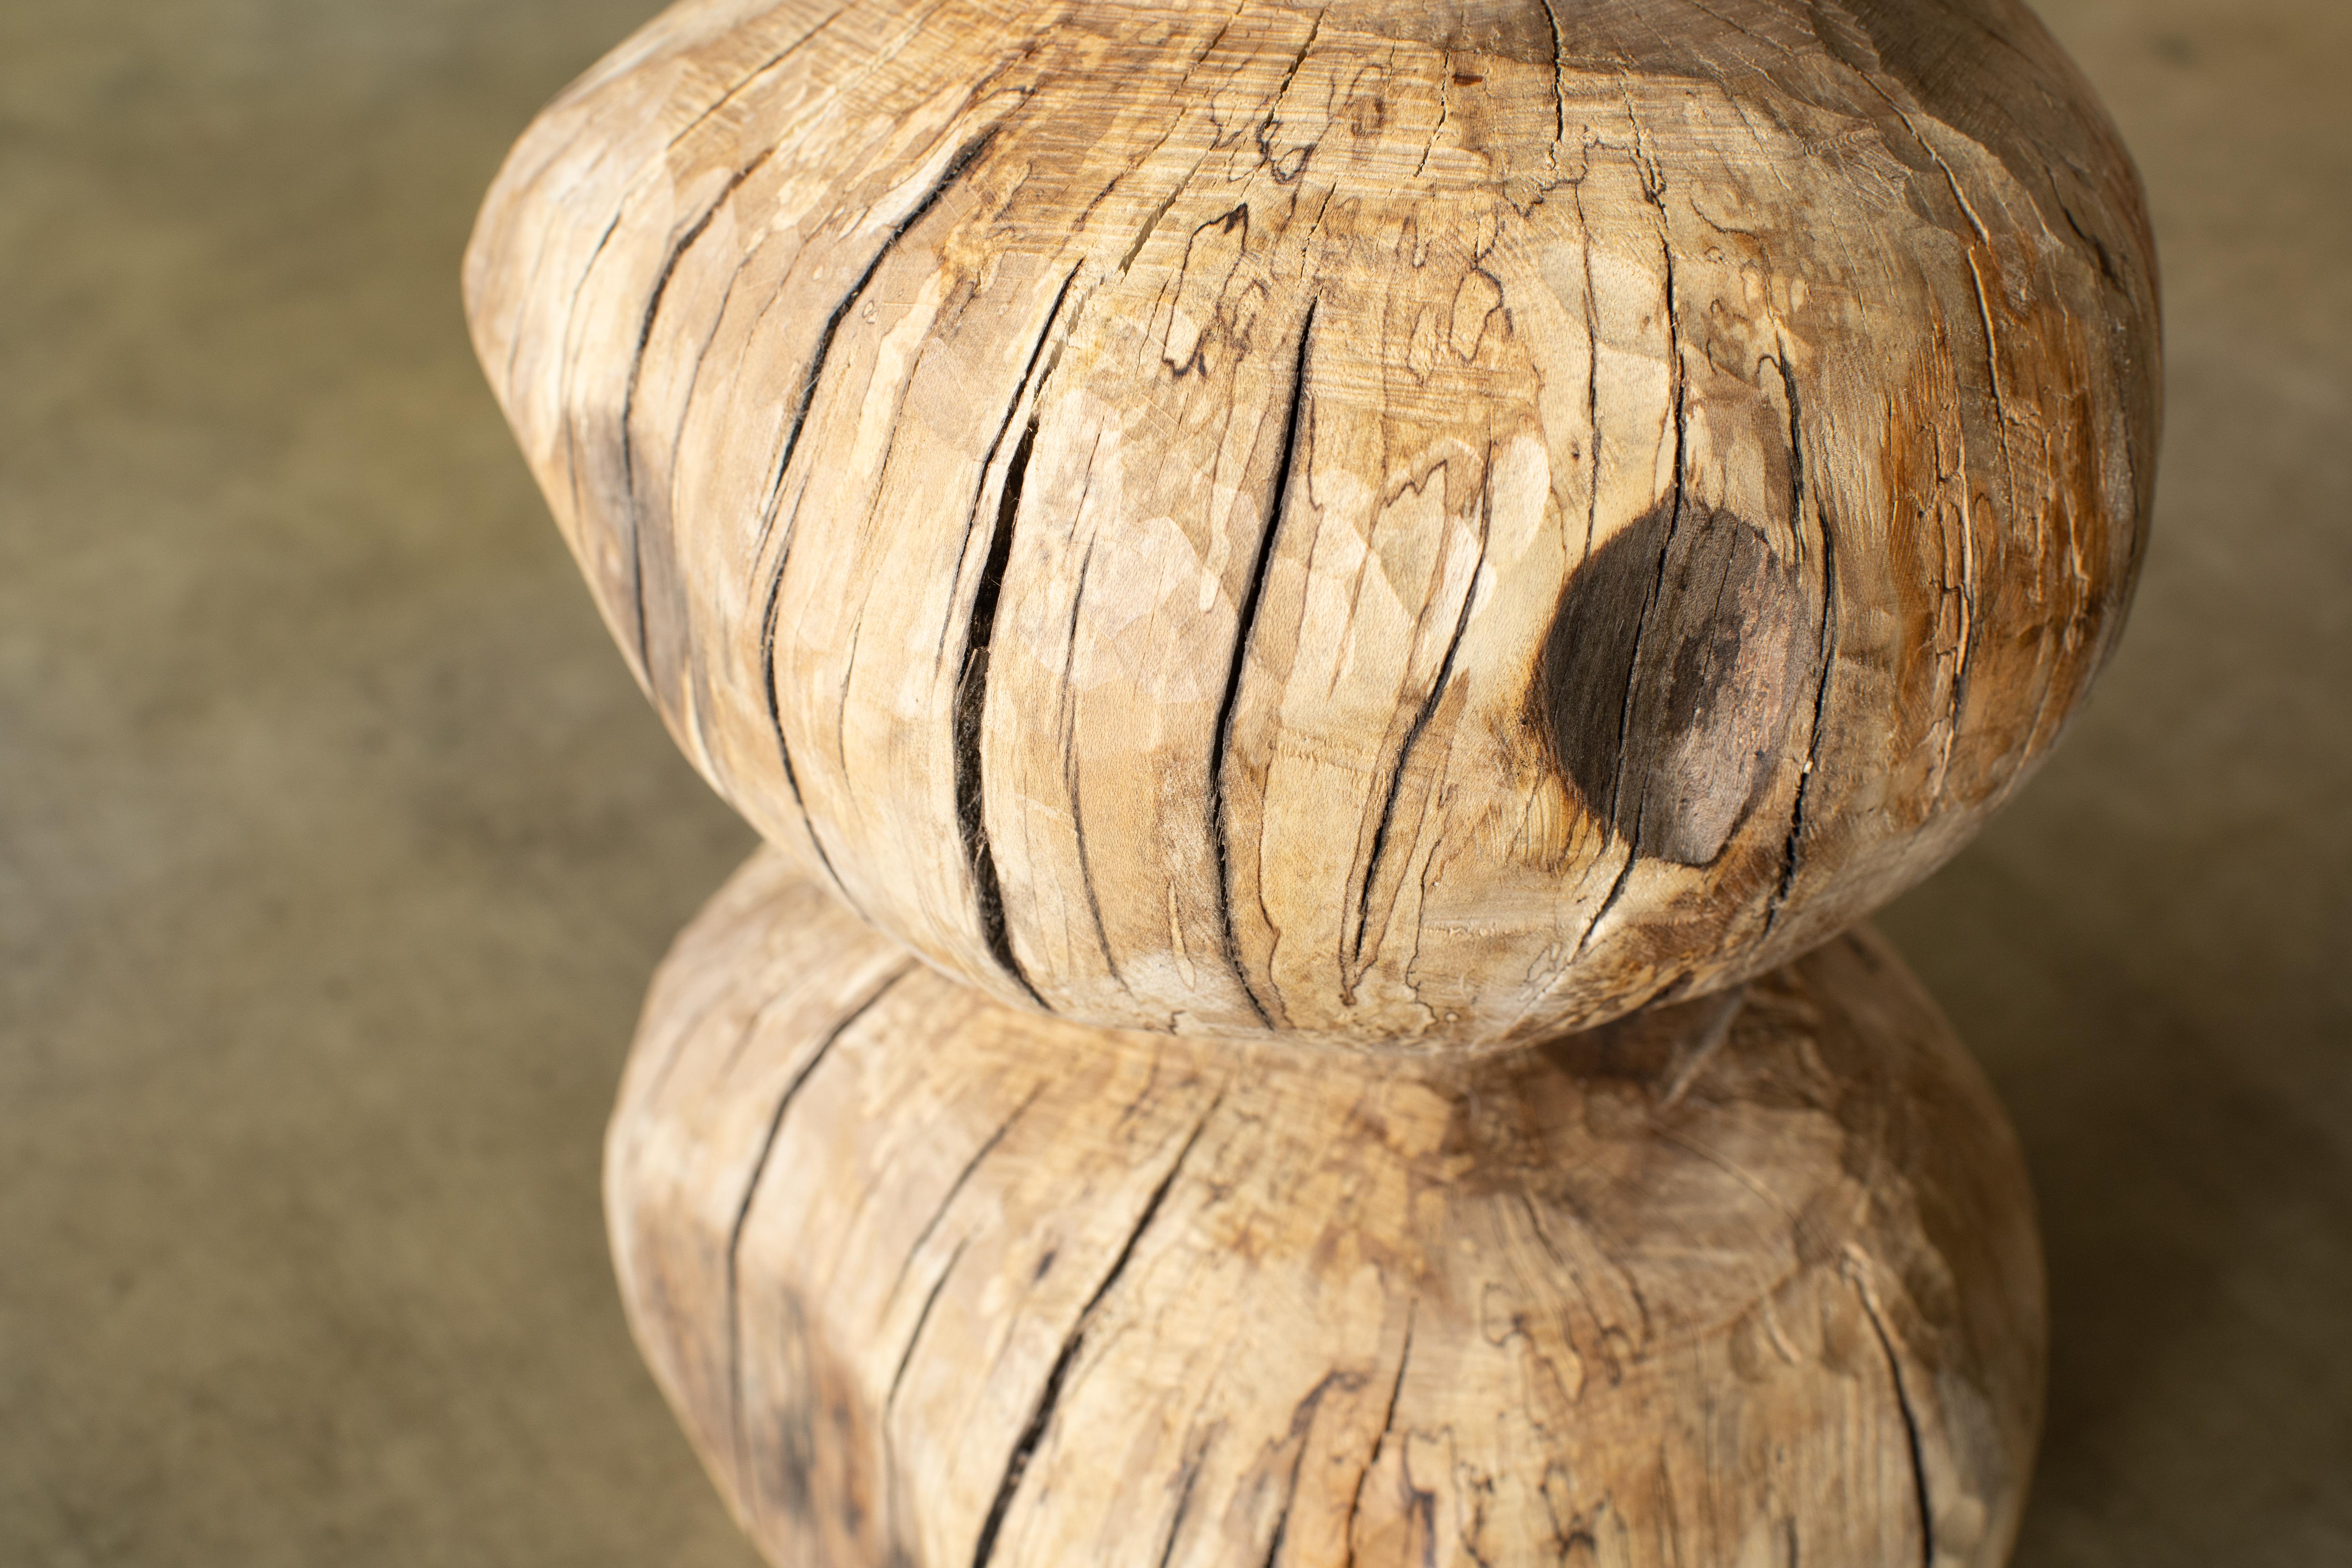 Hiroyuki Nishimura Furniture Sculptural Wood Stool 10-12 Tribal Glamping 1